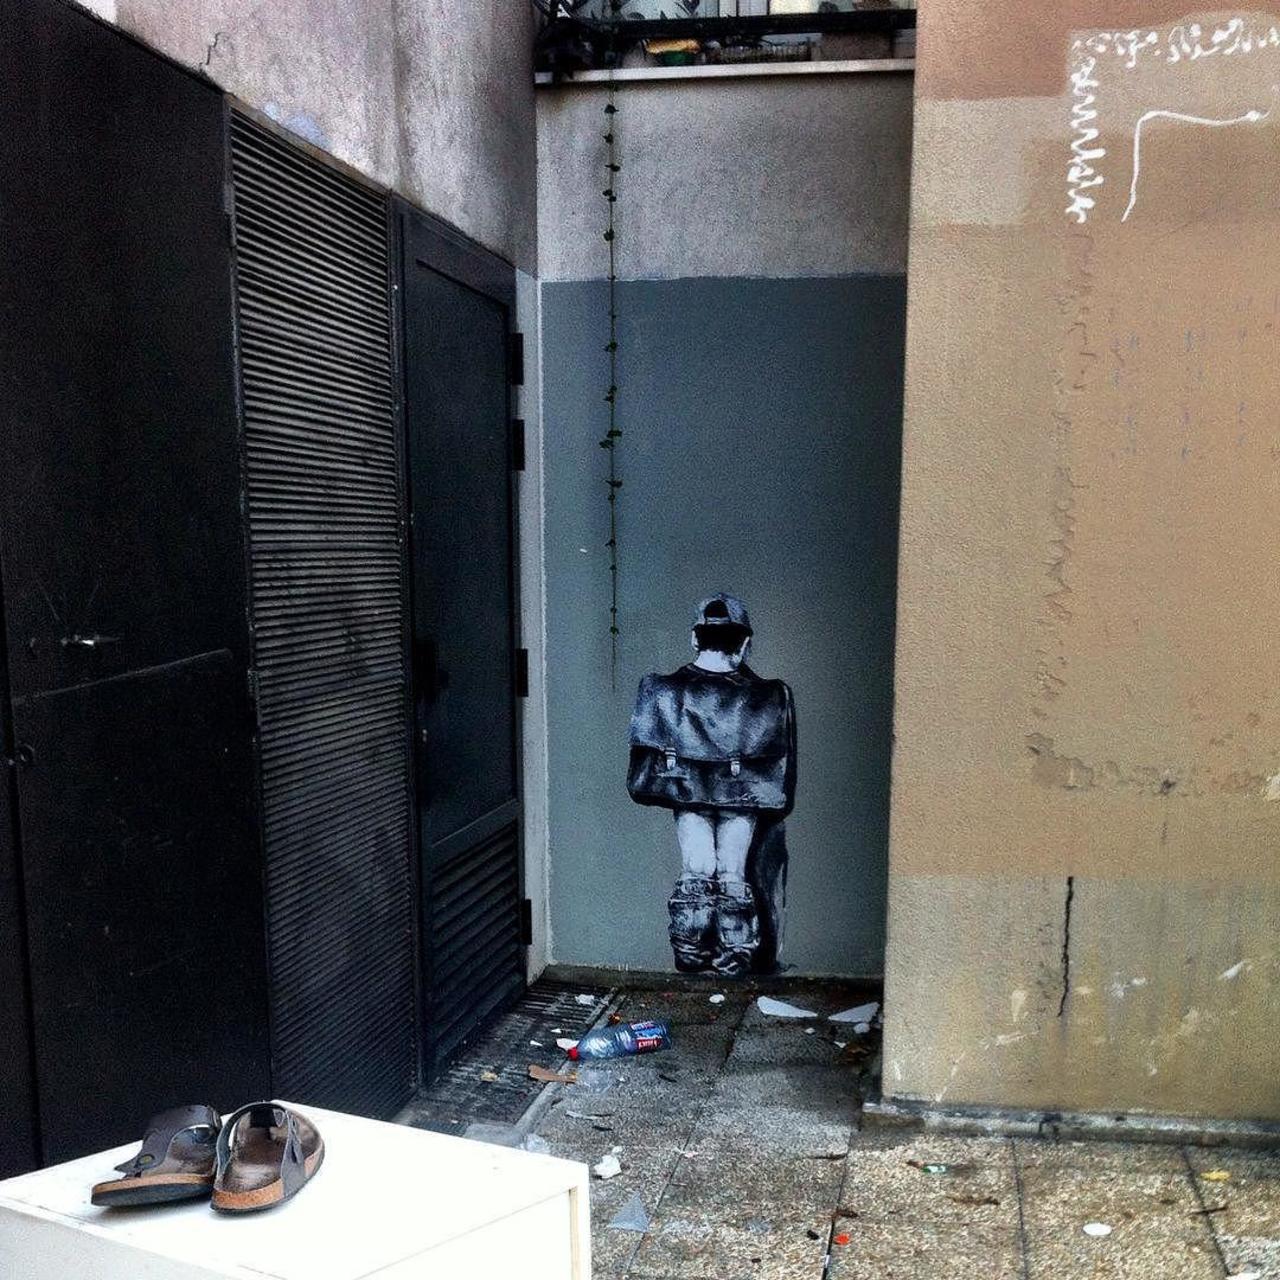 #Paris #graffiti photo by @noamzucker http://ift.tt/1MnnGYr #StreetArt http://t.co/hdJTQ93Pkg